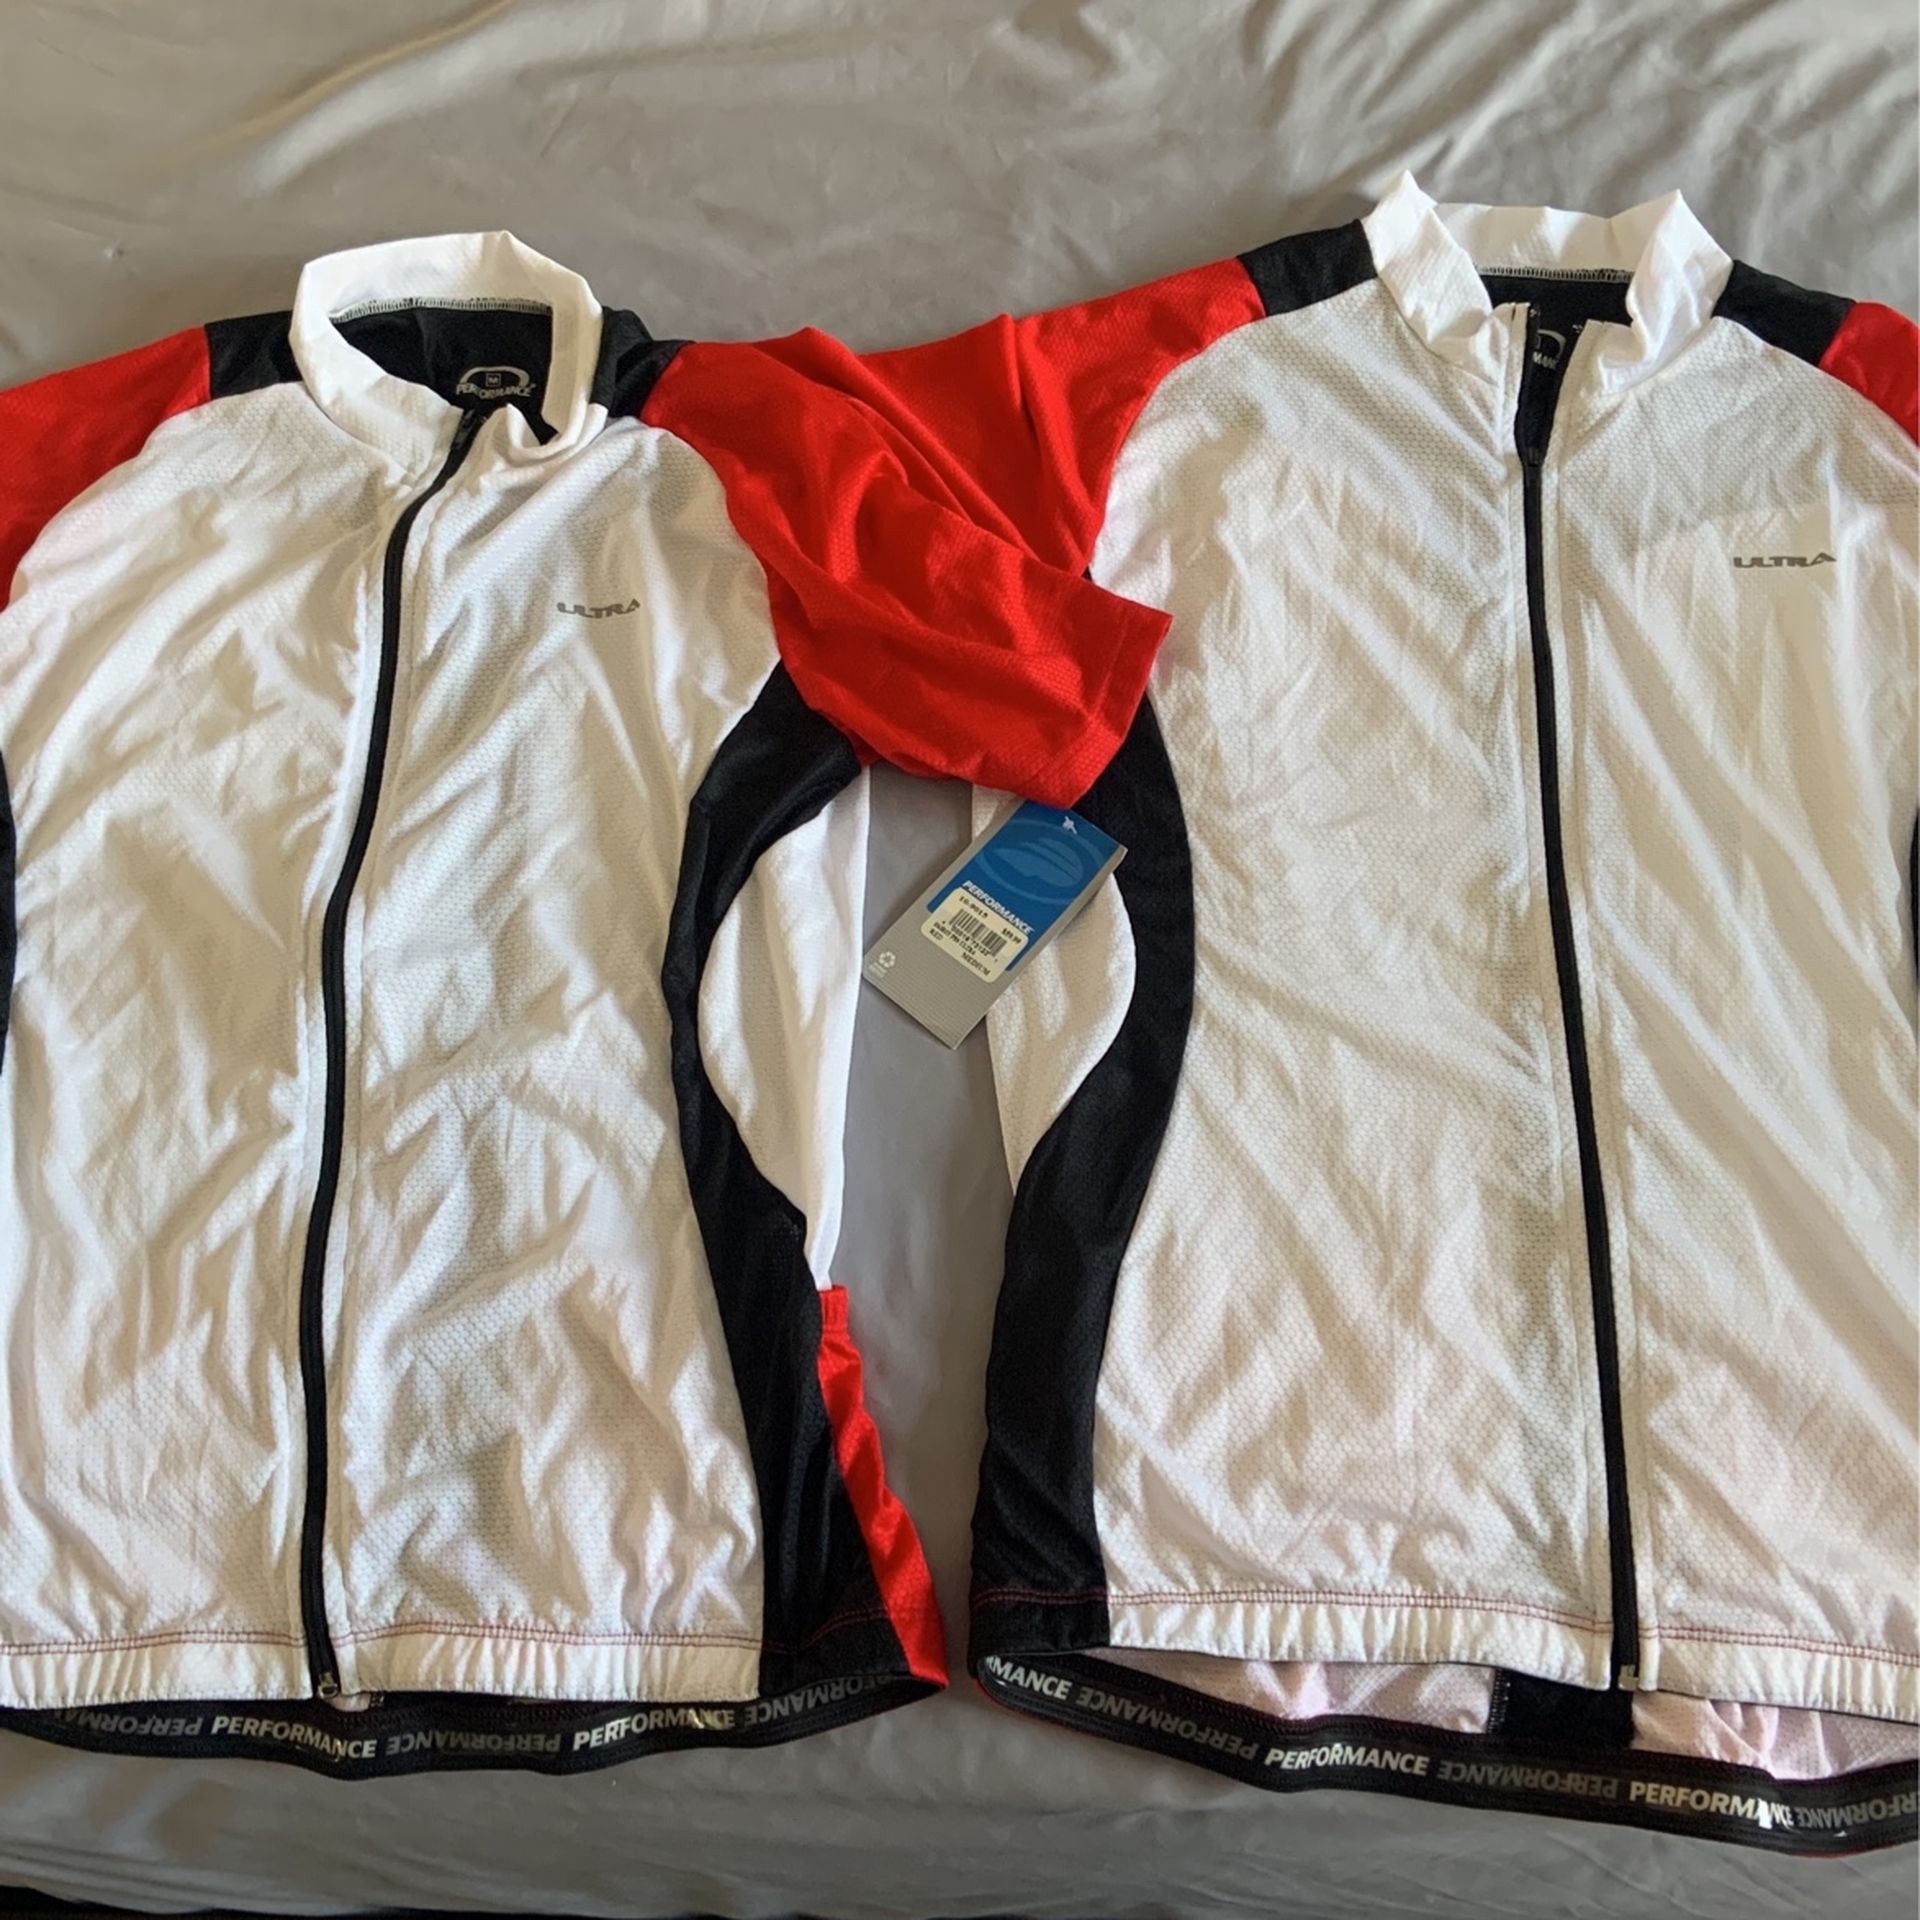 New men’s Ultra Performance Cycling Jerseys